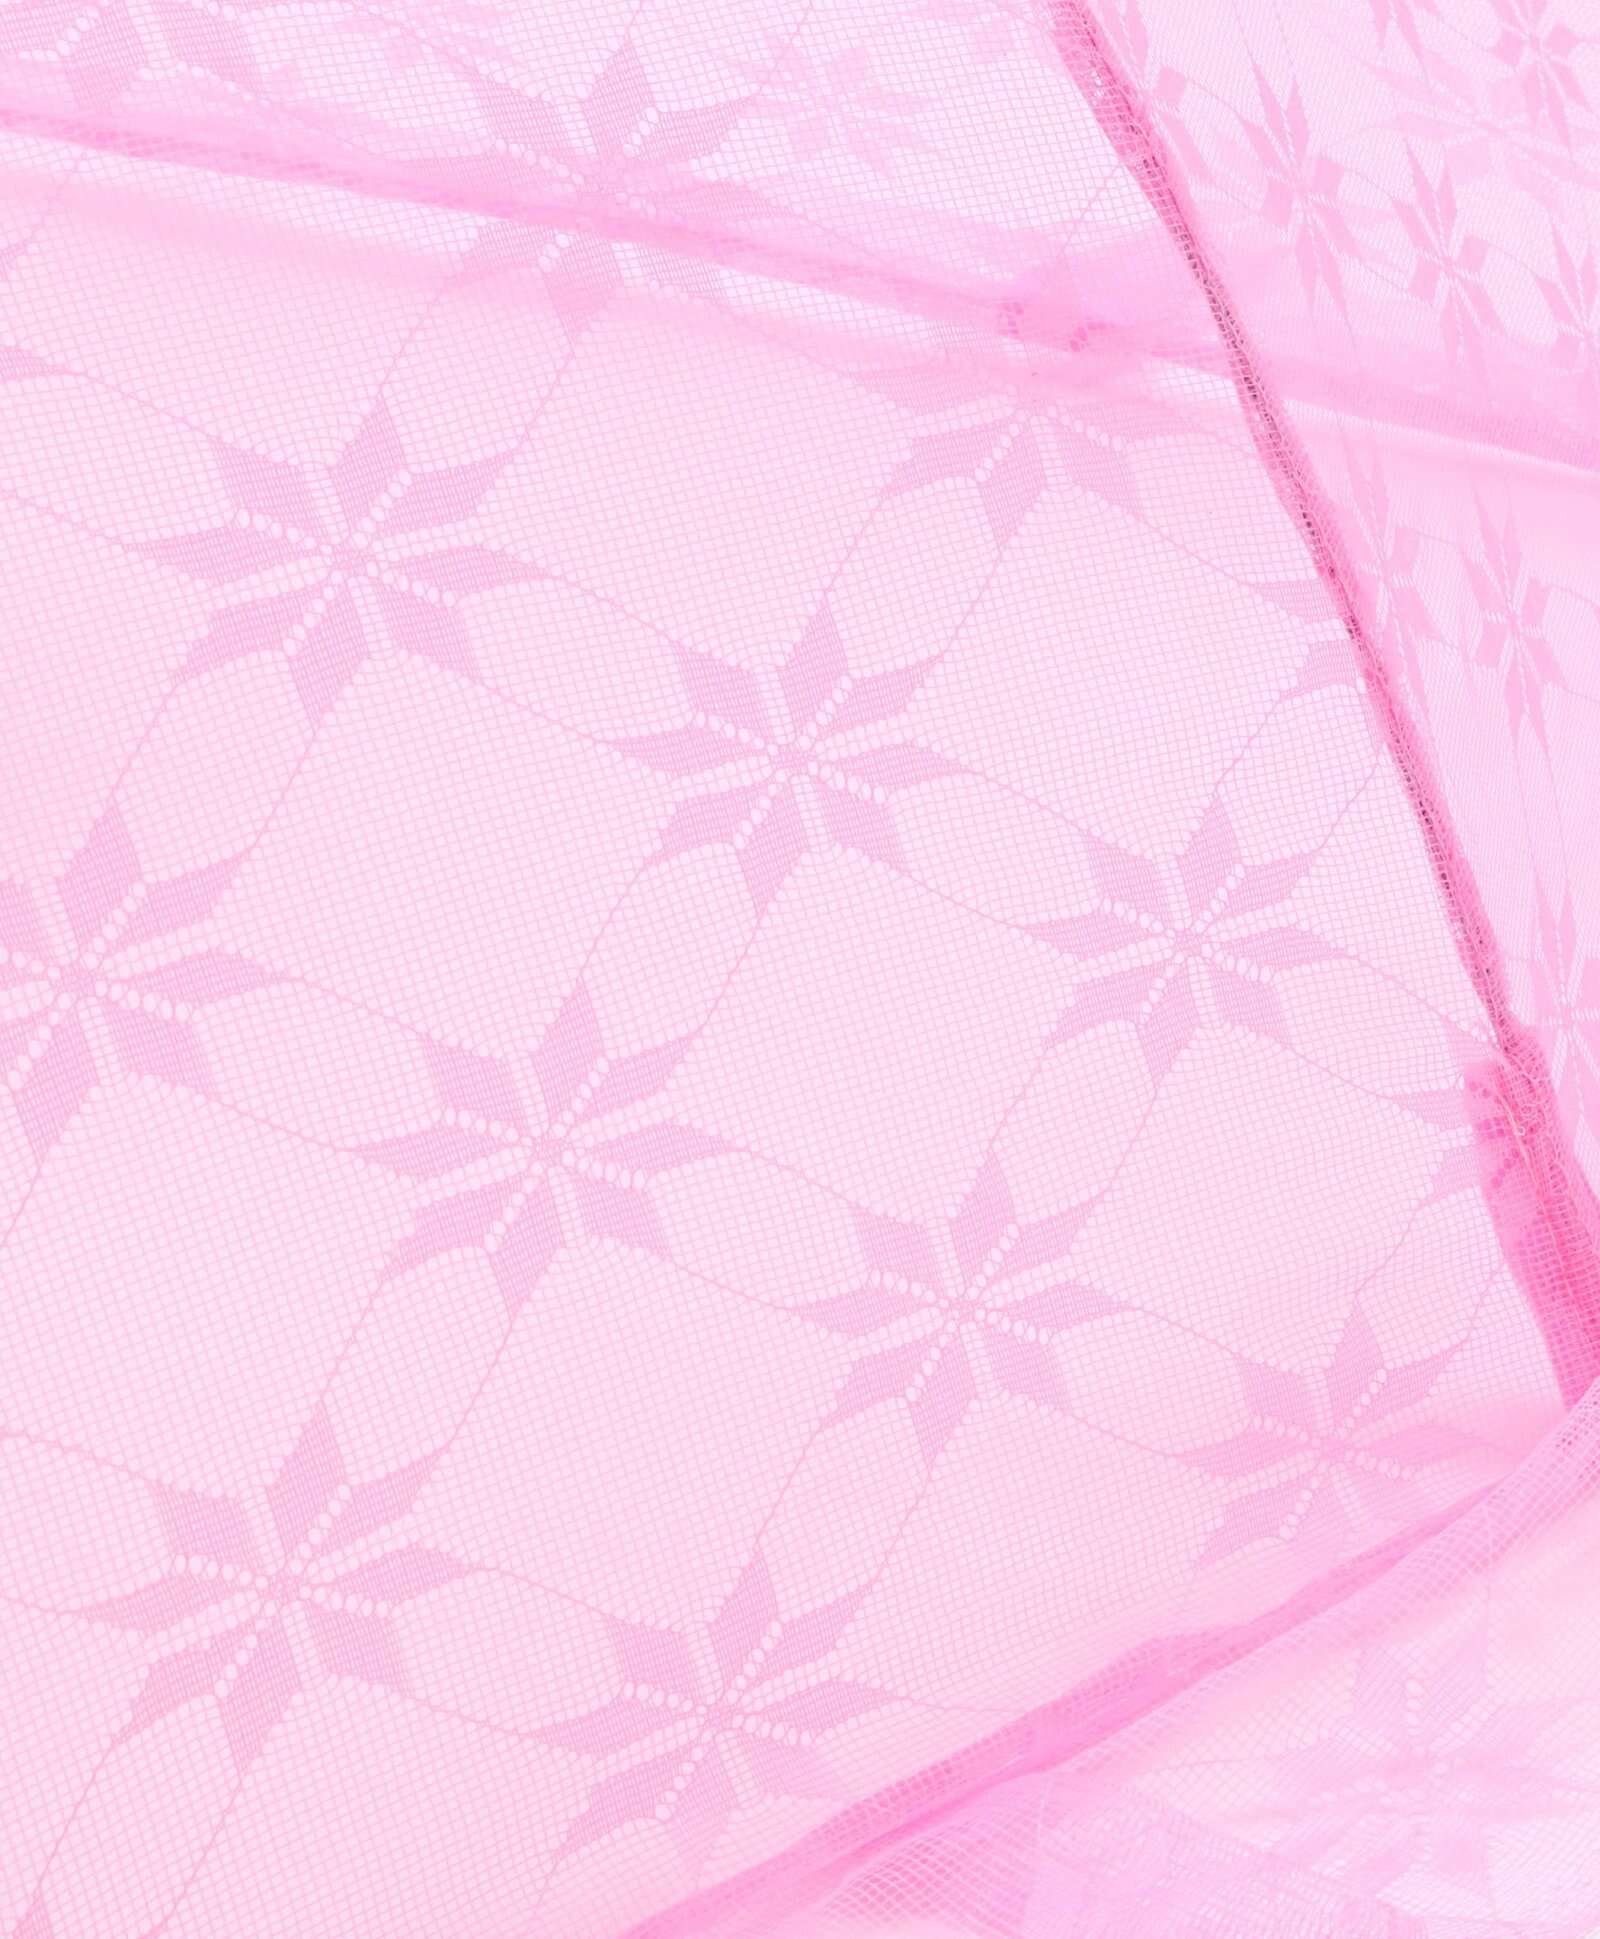 baby mosquito umbrella net - pink - small